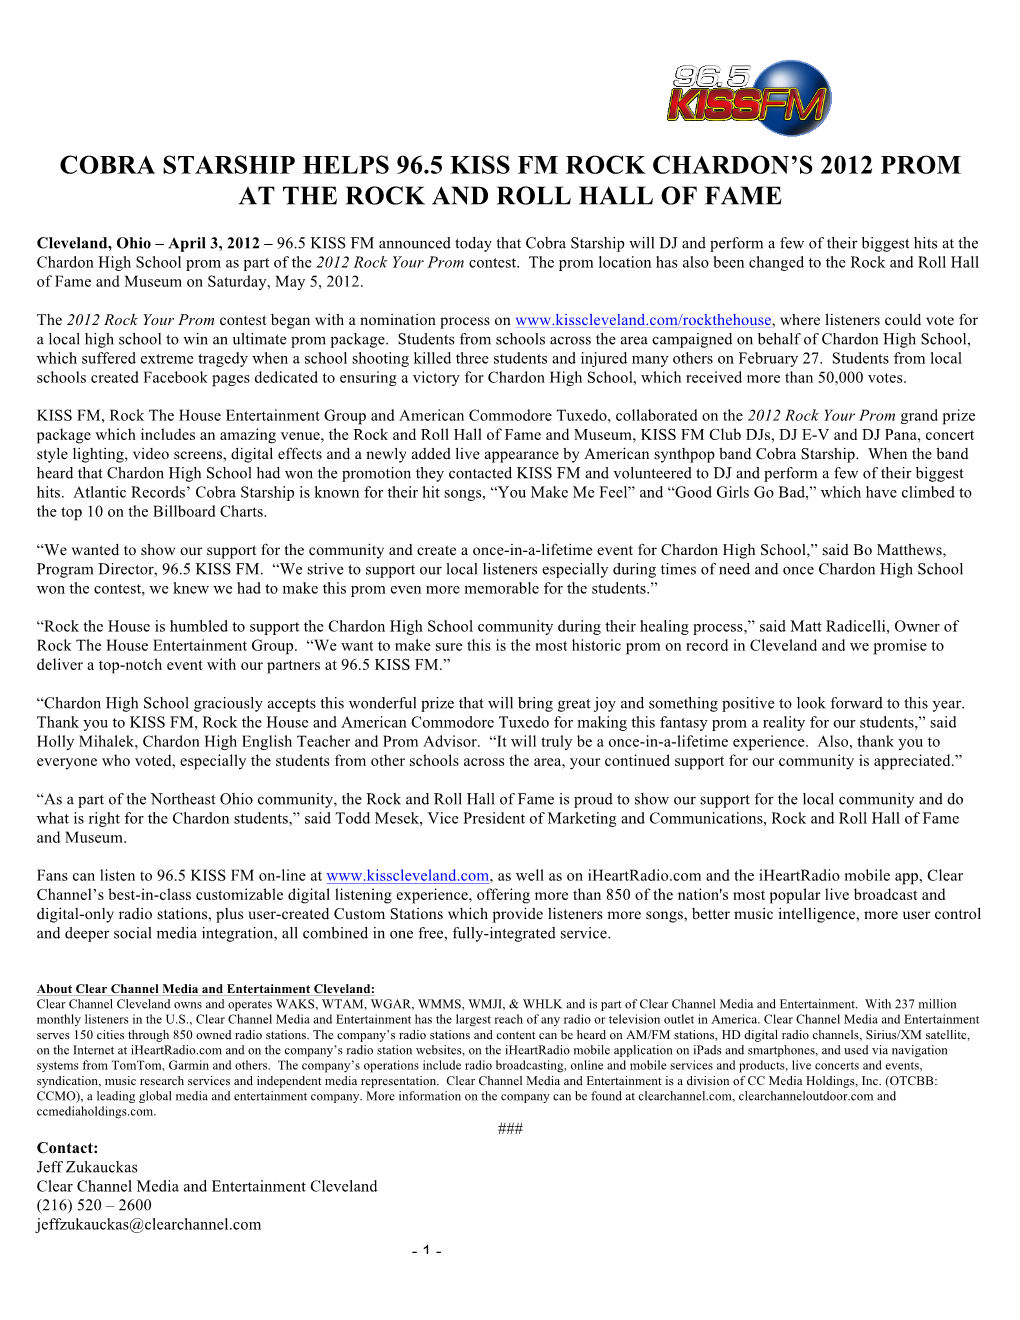 Cobra Starship Helps 96.5 Kiss Fm Rock Chardon's 2012 Prom at the Rock